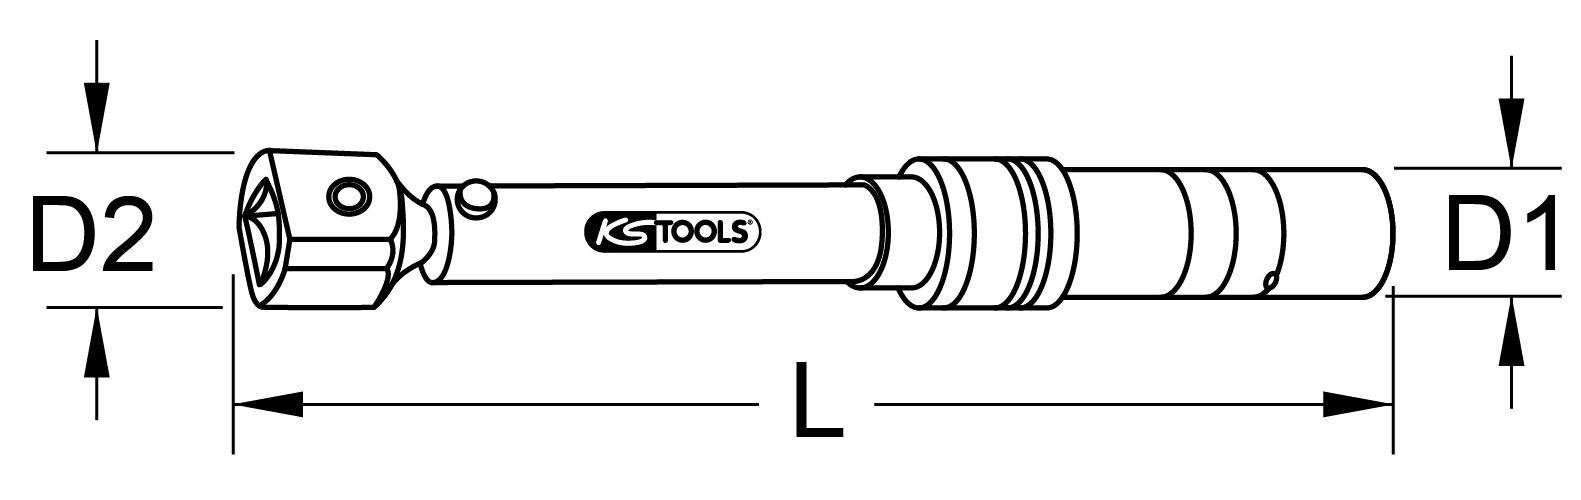 KS Tools 9x12mm Einsteck-Drehmomentschlüssel, Industrie Drehmomentschlüssel 3-15Nm